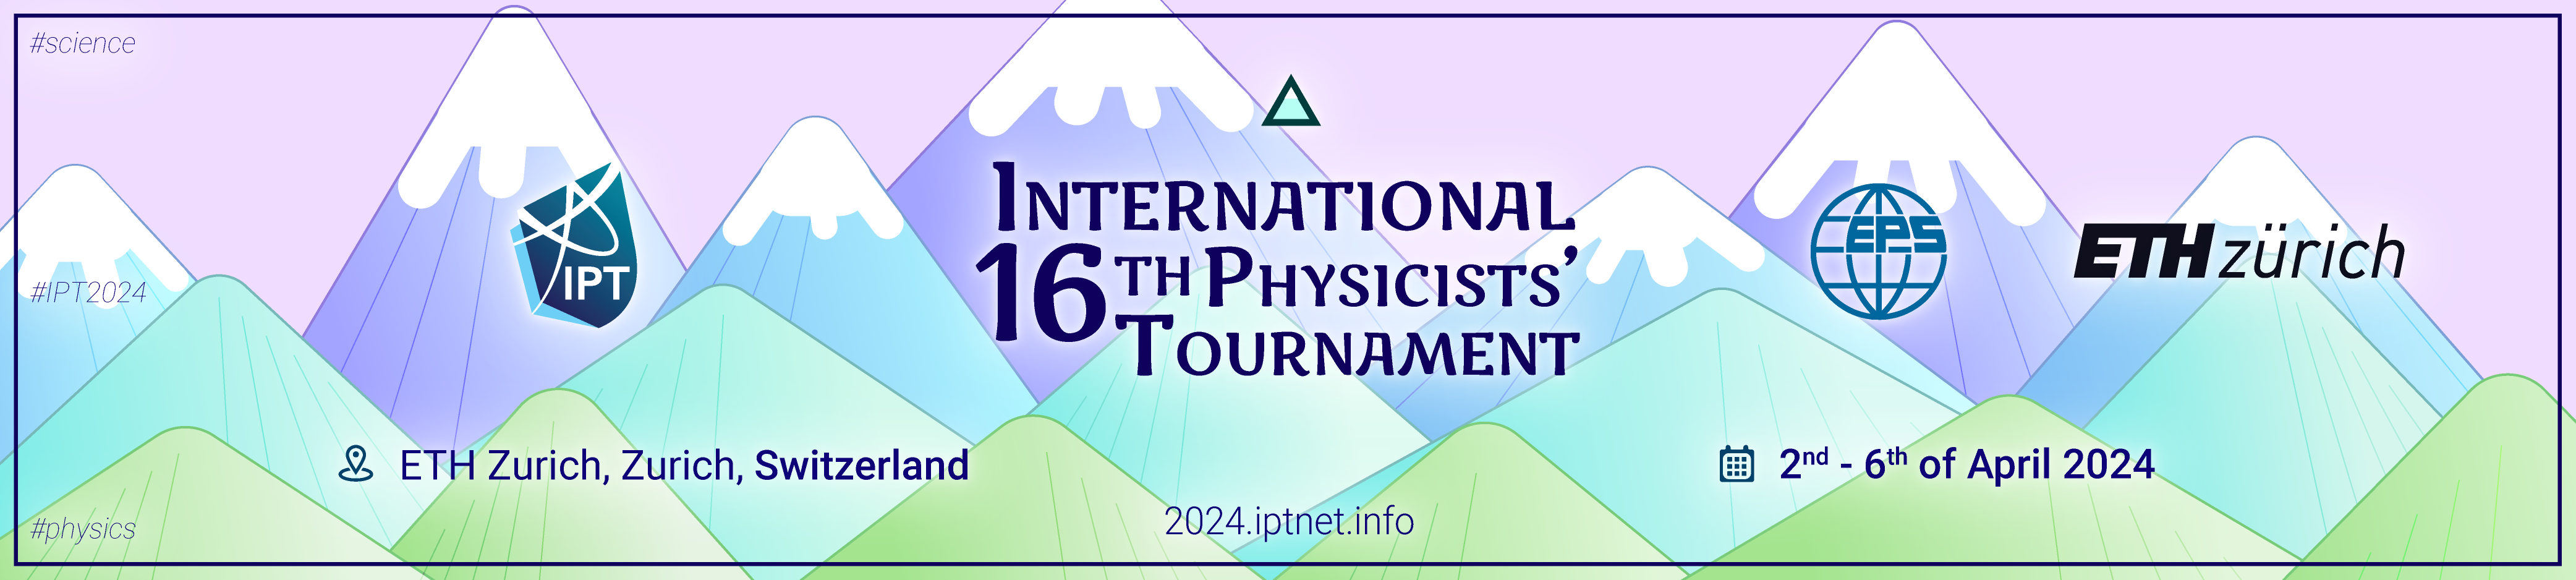 International Physicists’ Tournament 2024